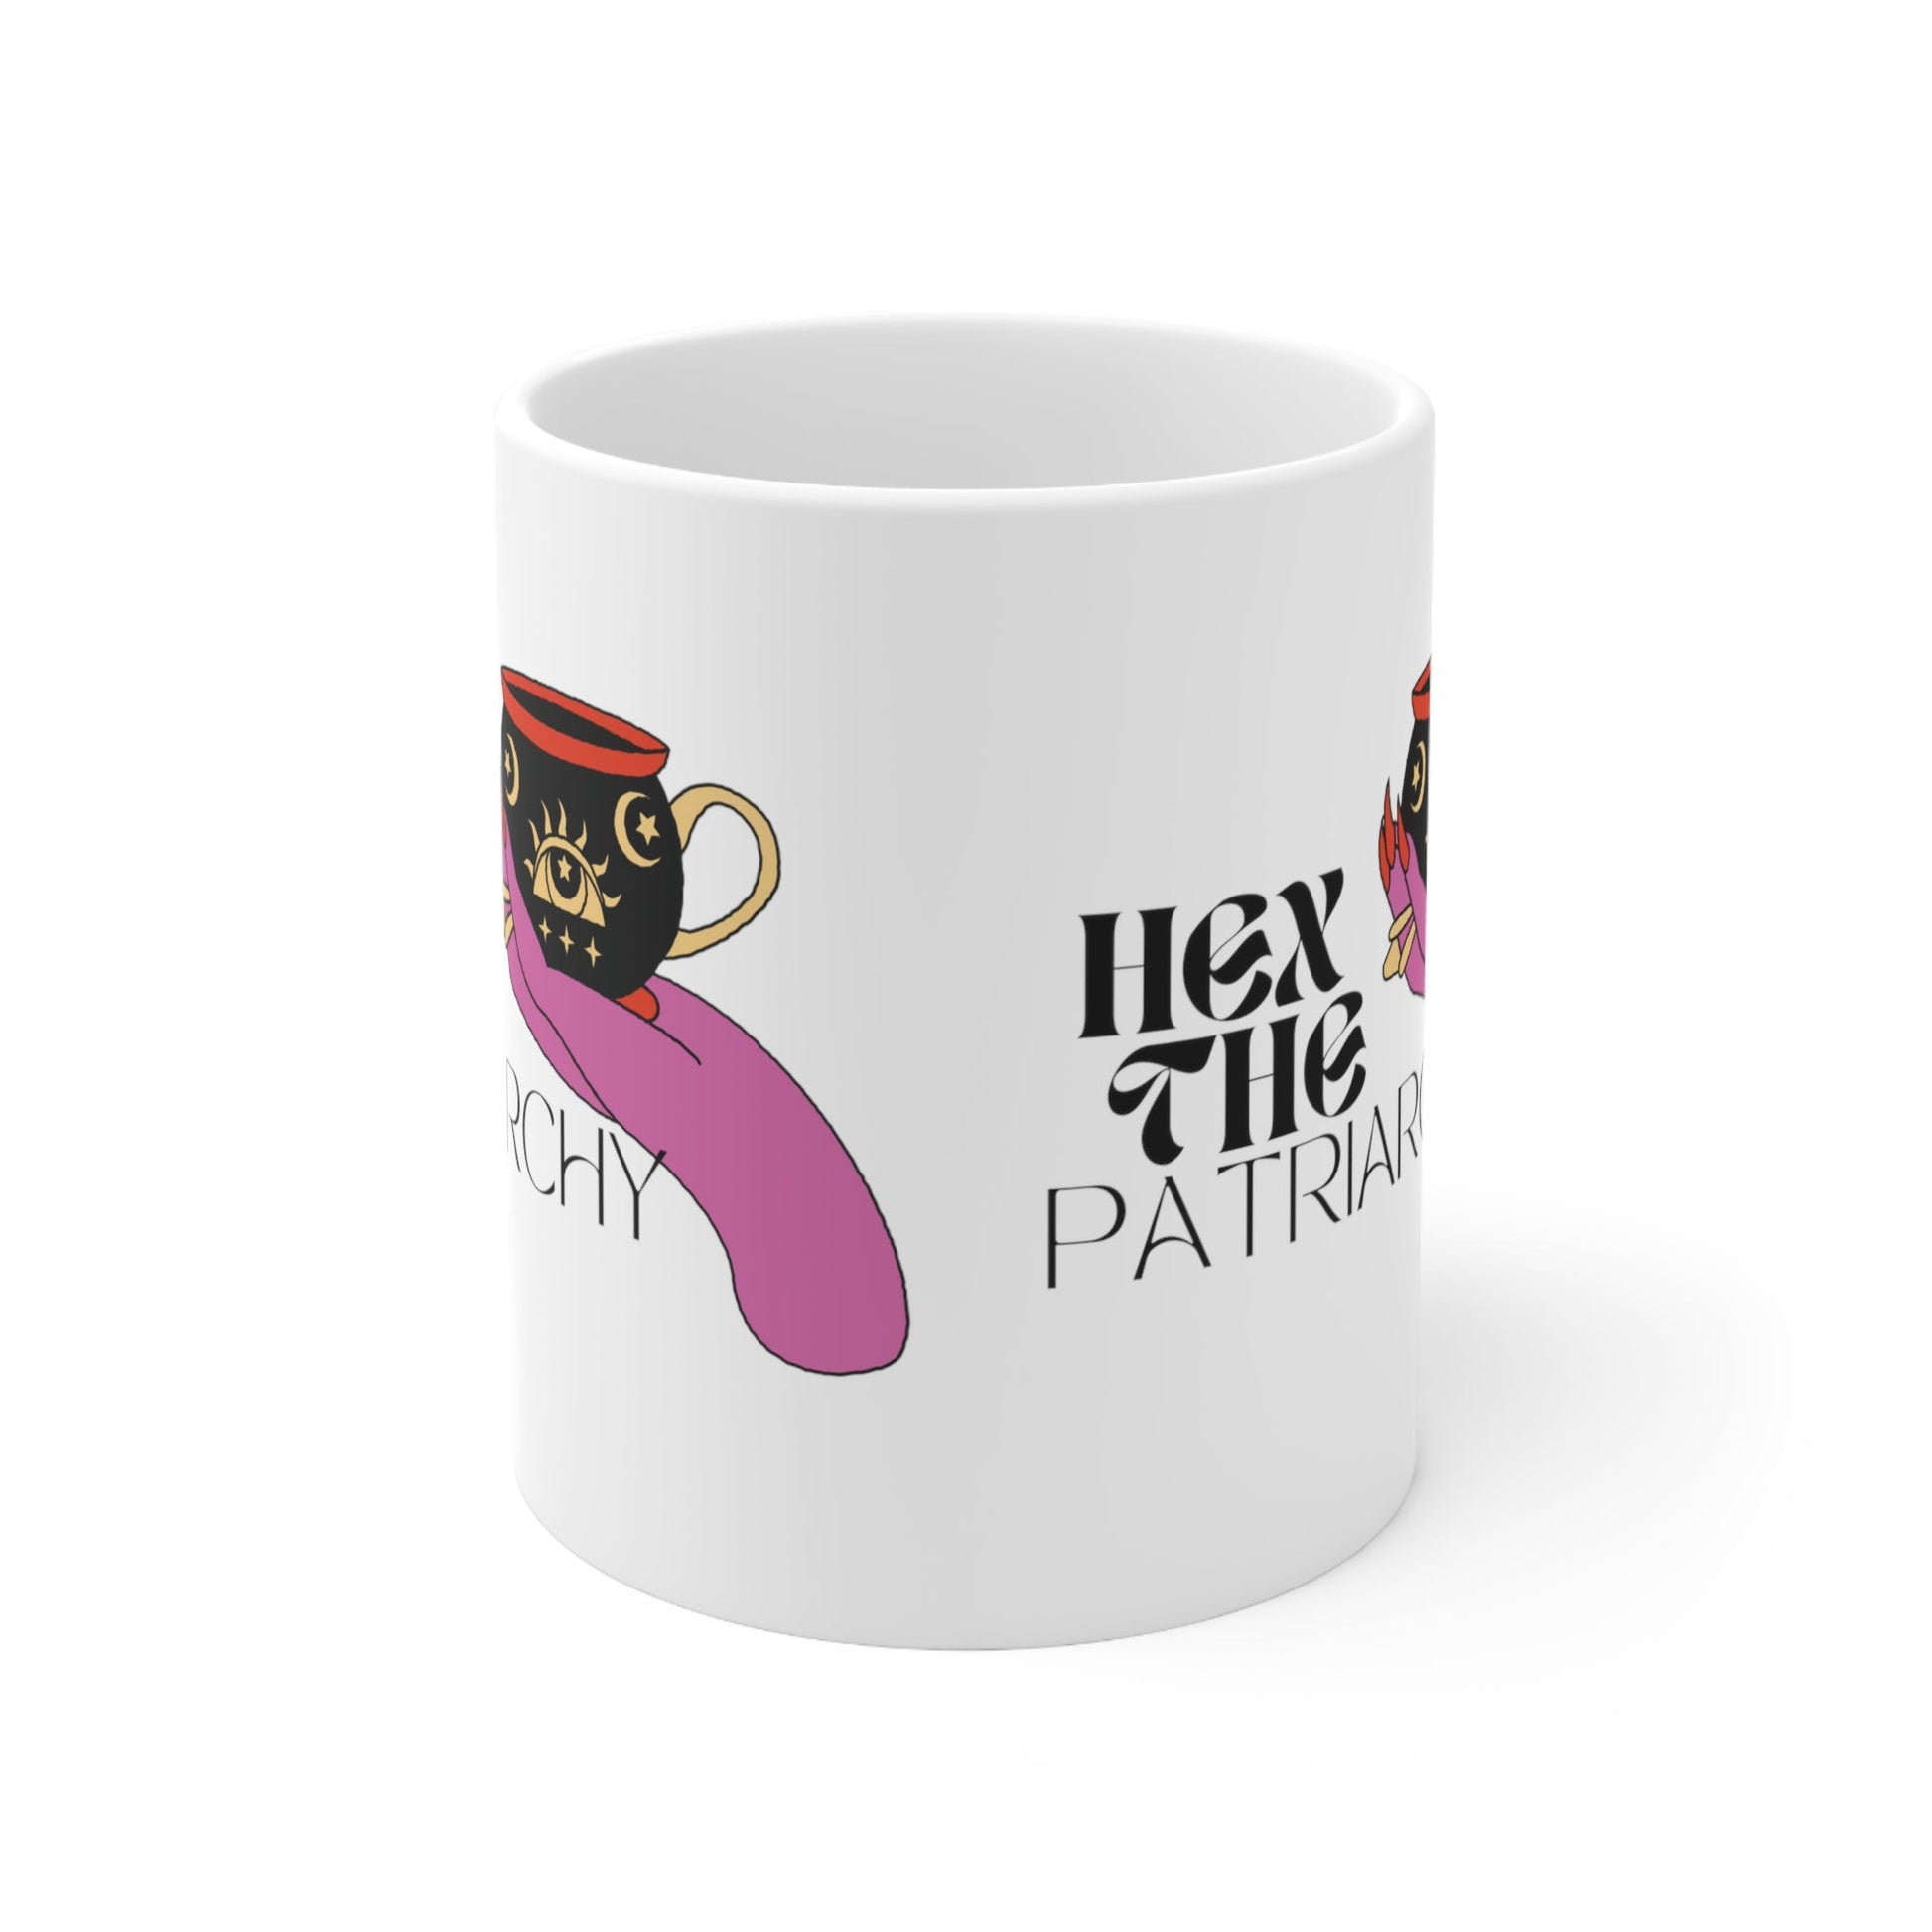 Hex the Patriarchy Ceramic Mug 11oz